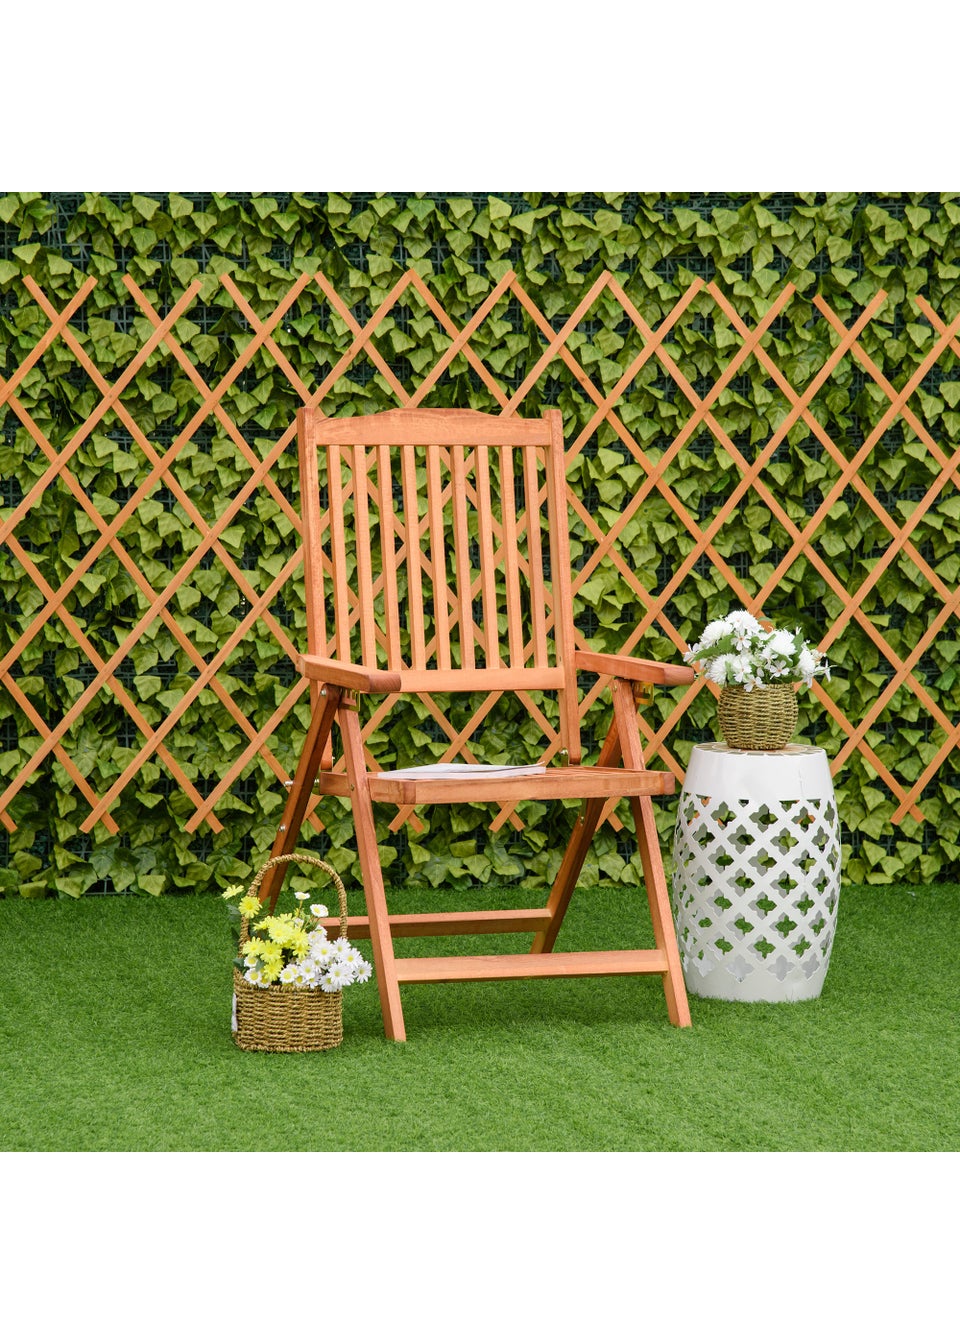 Outsunny 5-Position Garden Dining Chair Acacia Wood Outdoor Recliner